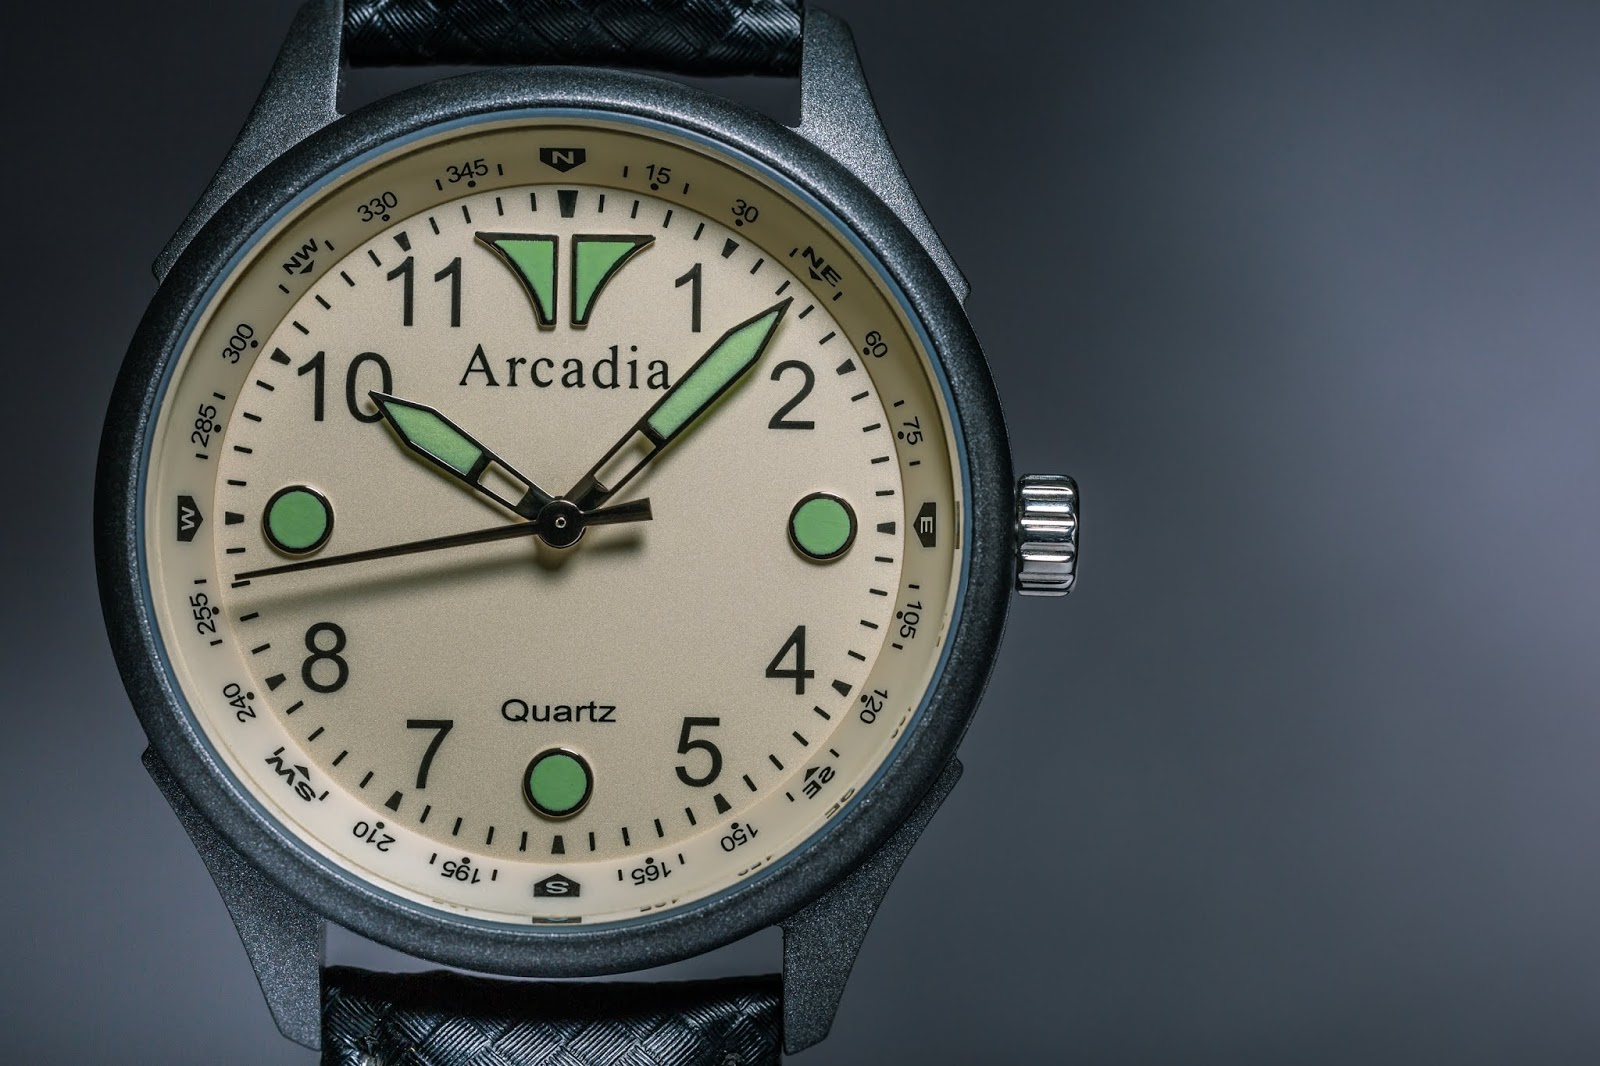 Introducing the Arcadia G1.0 Graphene Field Watch